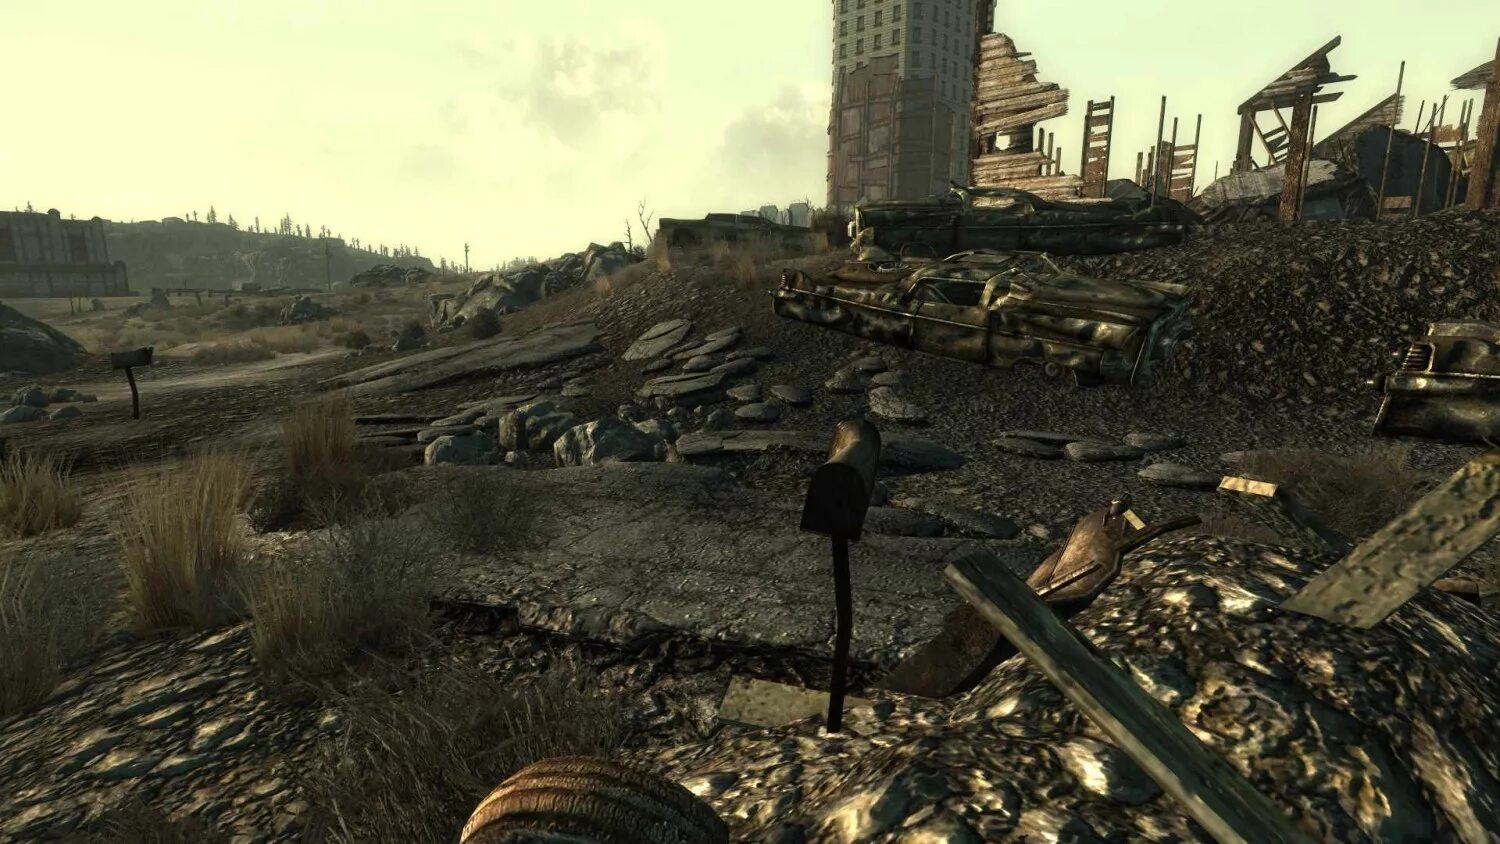 Fallout 3 screenshots. Фоллаут 3 скрины. Fallout 3 Скриншоты. Fallout 3 Nova.